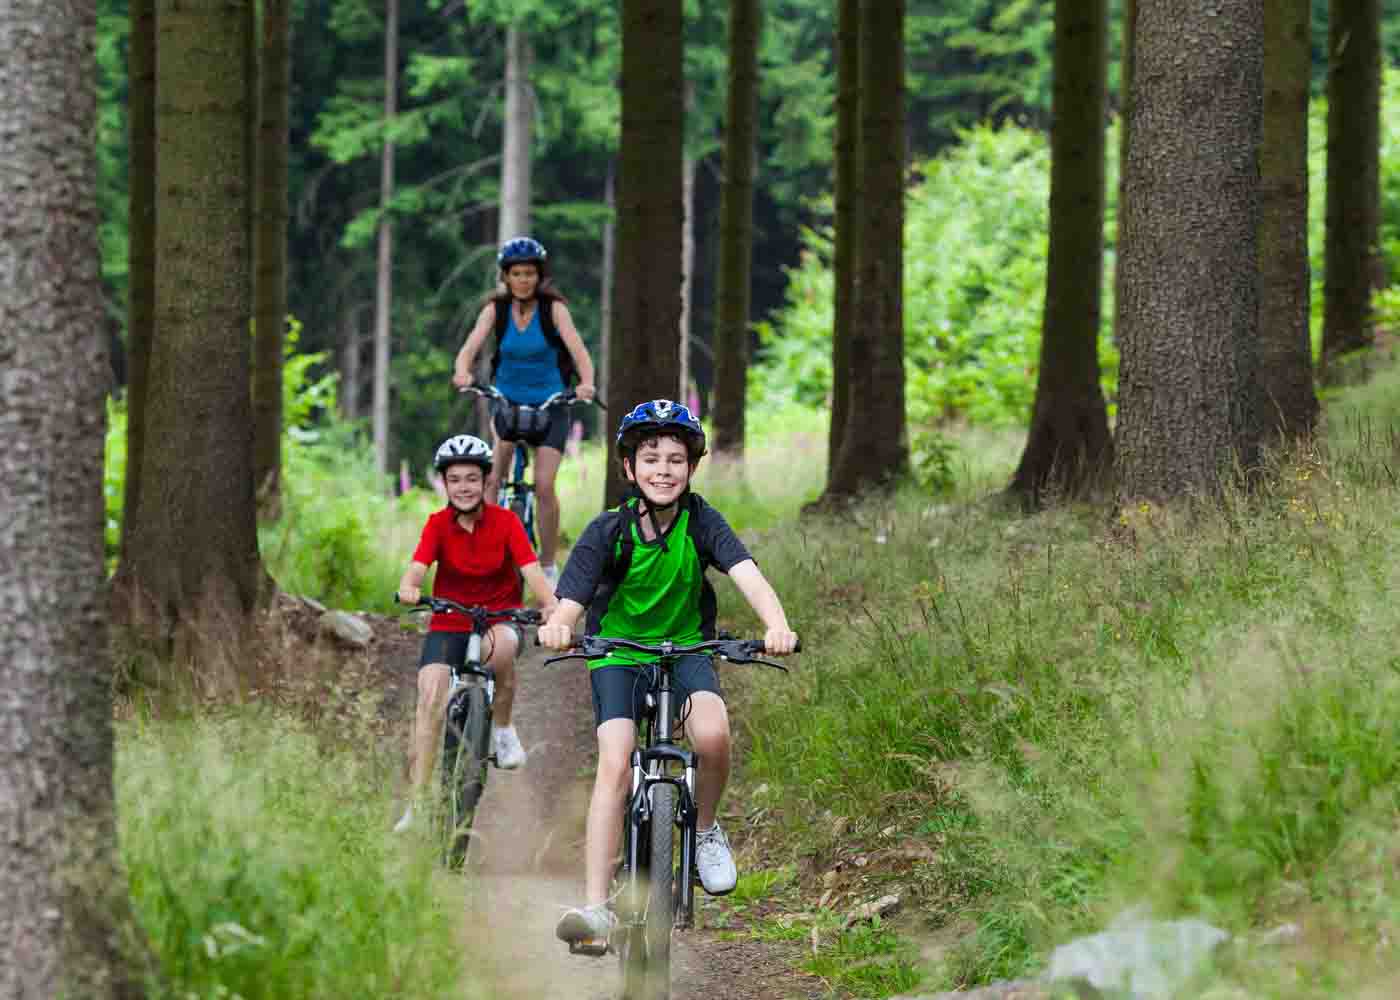 Children cycling through a wood